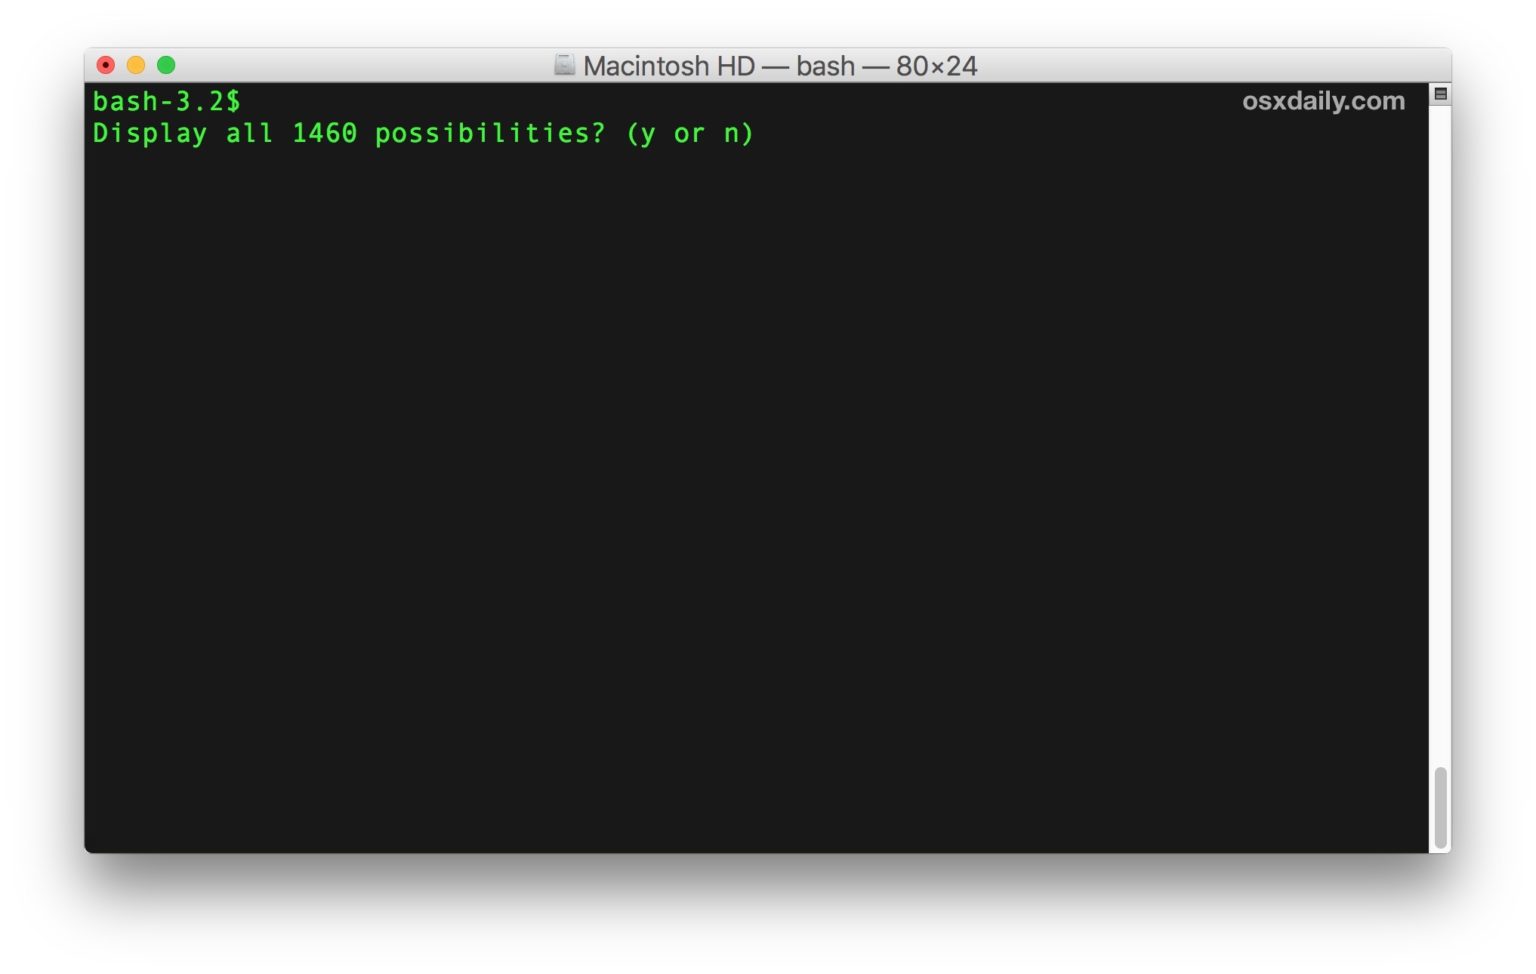 mac terminal commands pdf